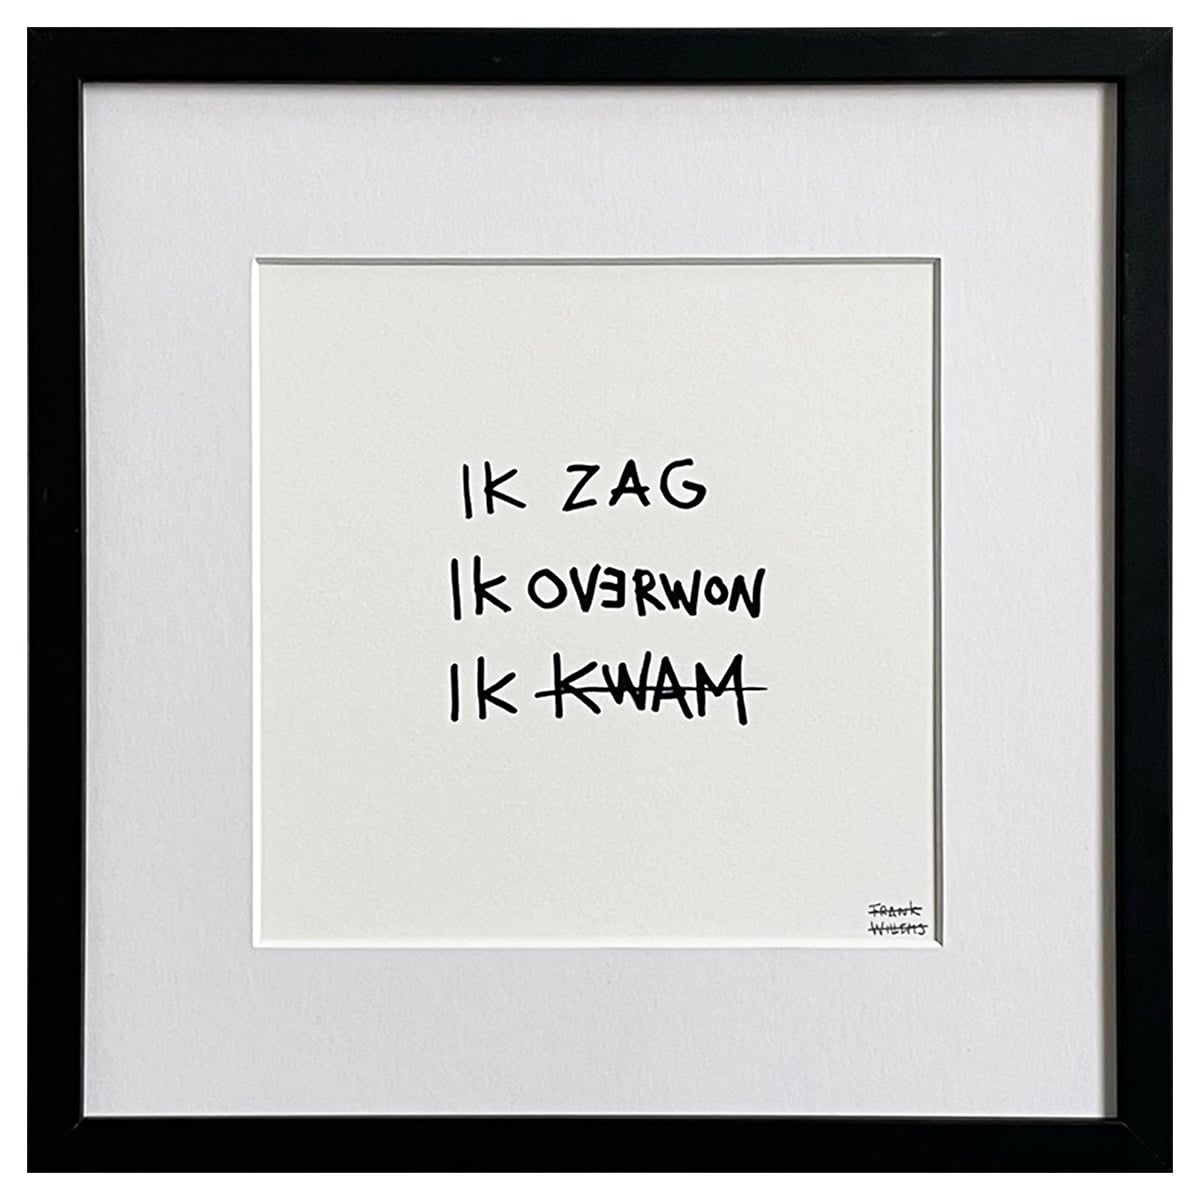 Limited Edt Text Prints - IK ZAG, IK OVERWON, IK KWAM - Frank Willems